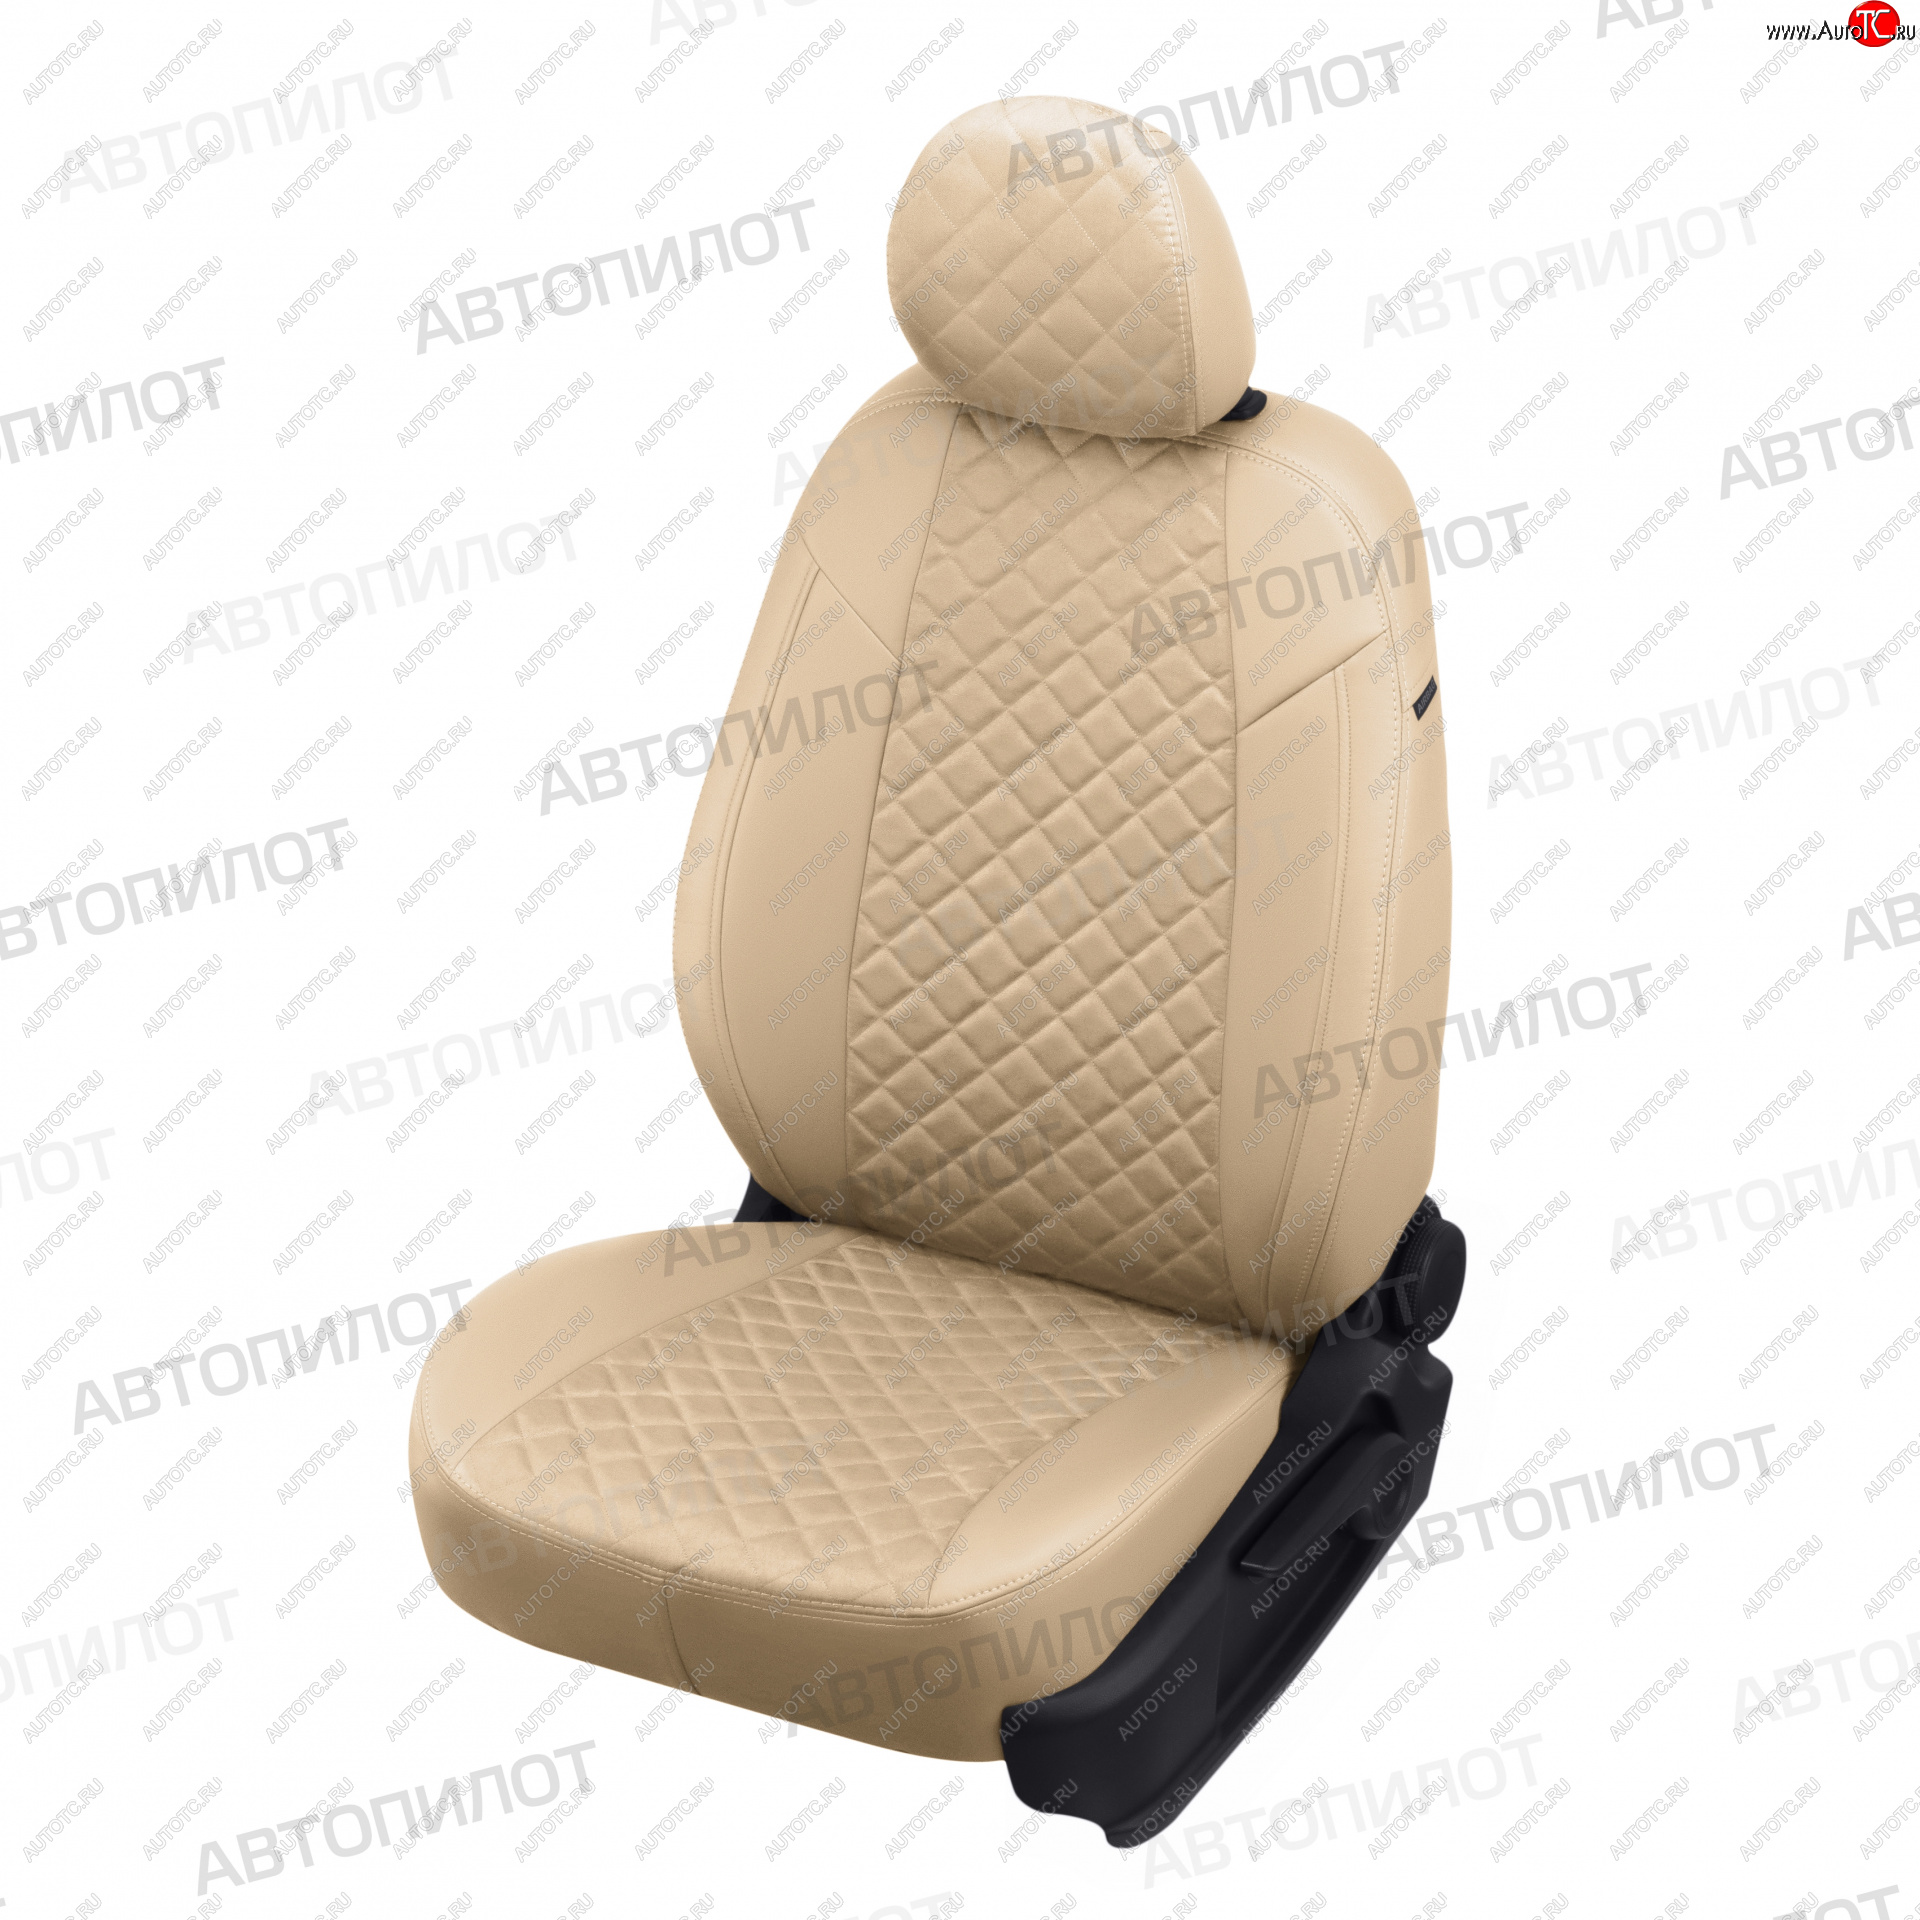 7 799 р. Чехлы сидений (экокожа/алькантара) Автопилот Ромб  Hyundai I40  1 VF (2011-2019) (бежевый)